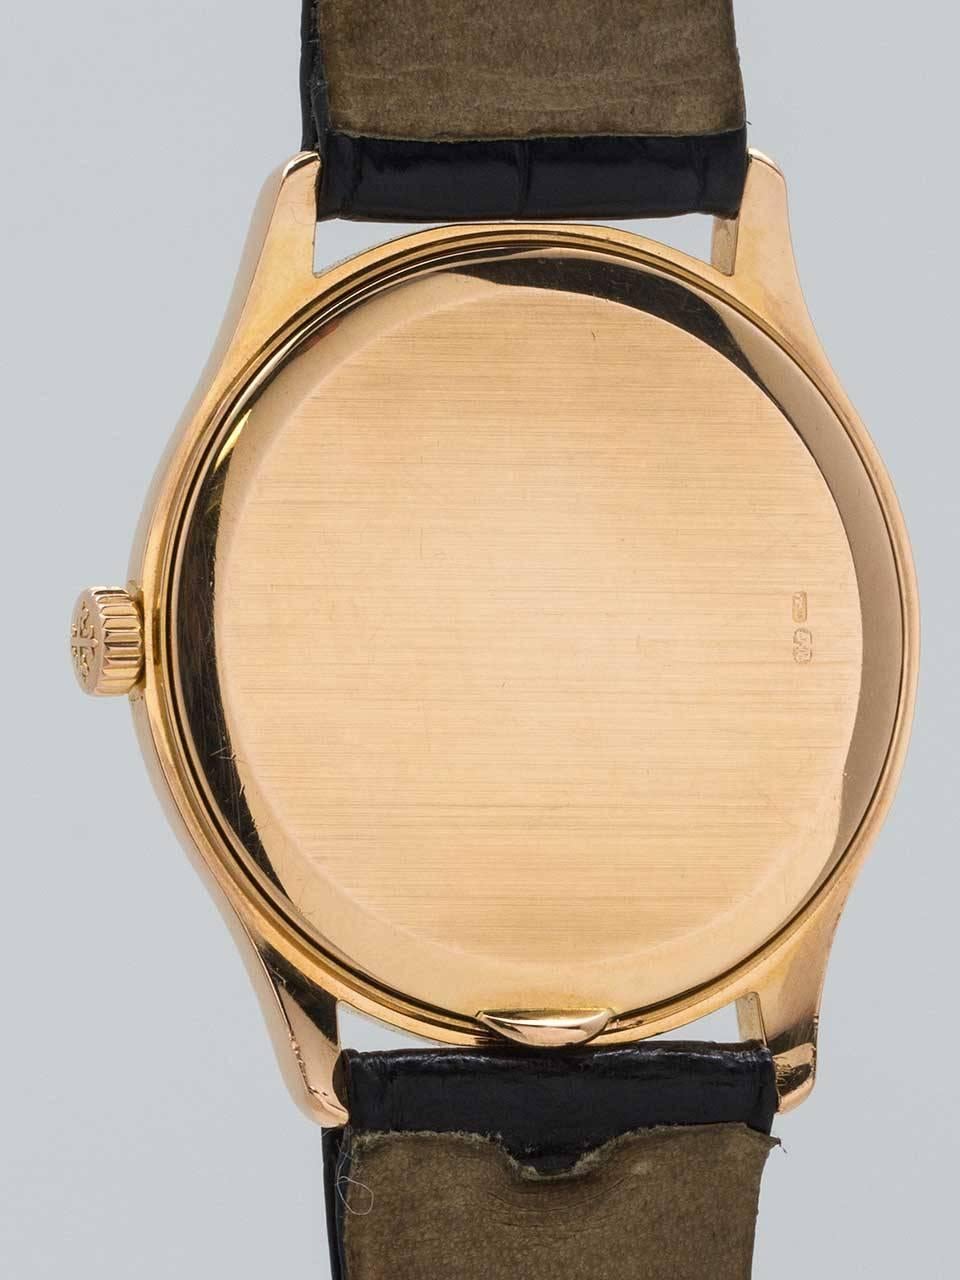 Men's Patek Philippe Rose Gold manual wind Wristwatch Ref 3923, circa 1990